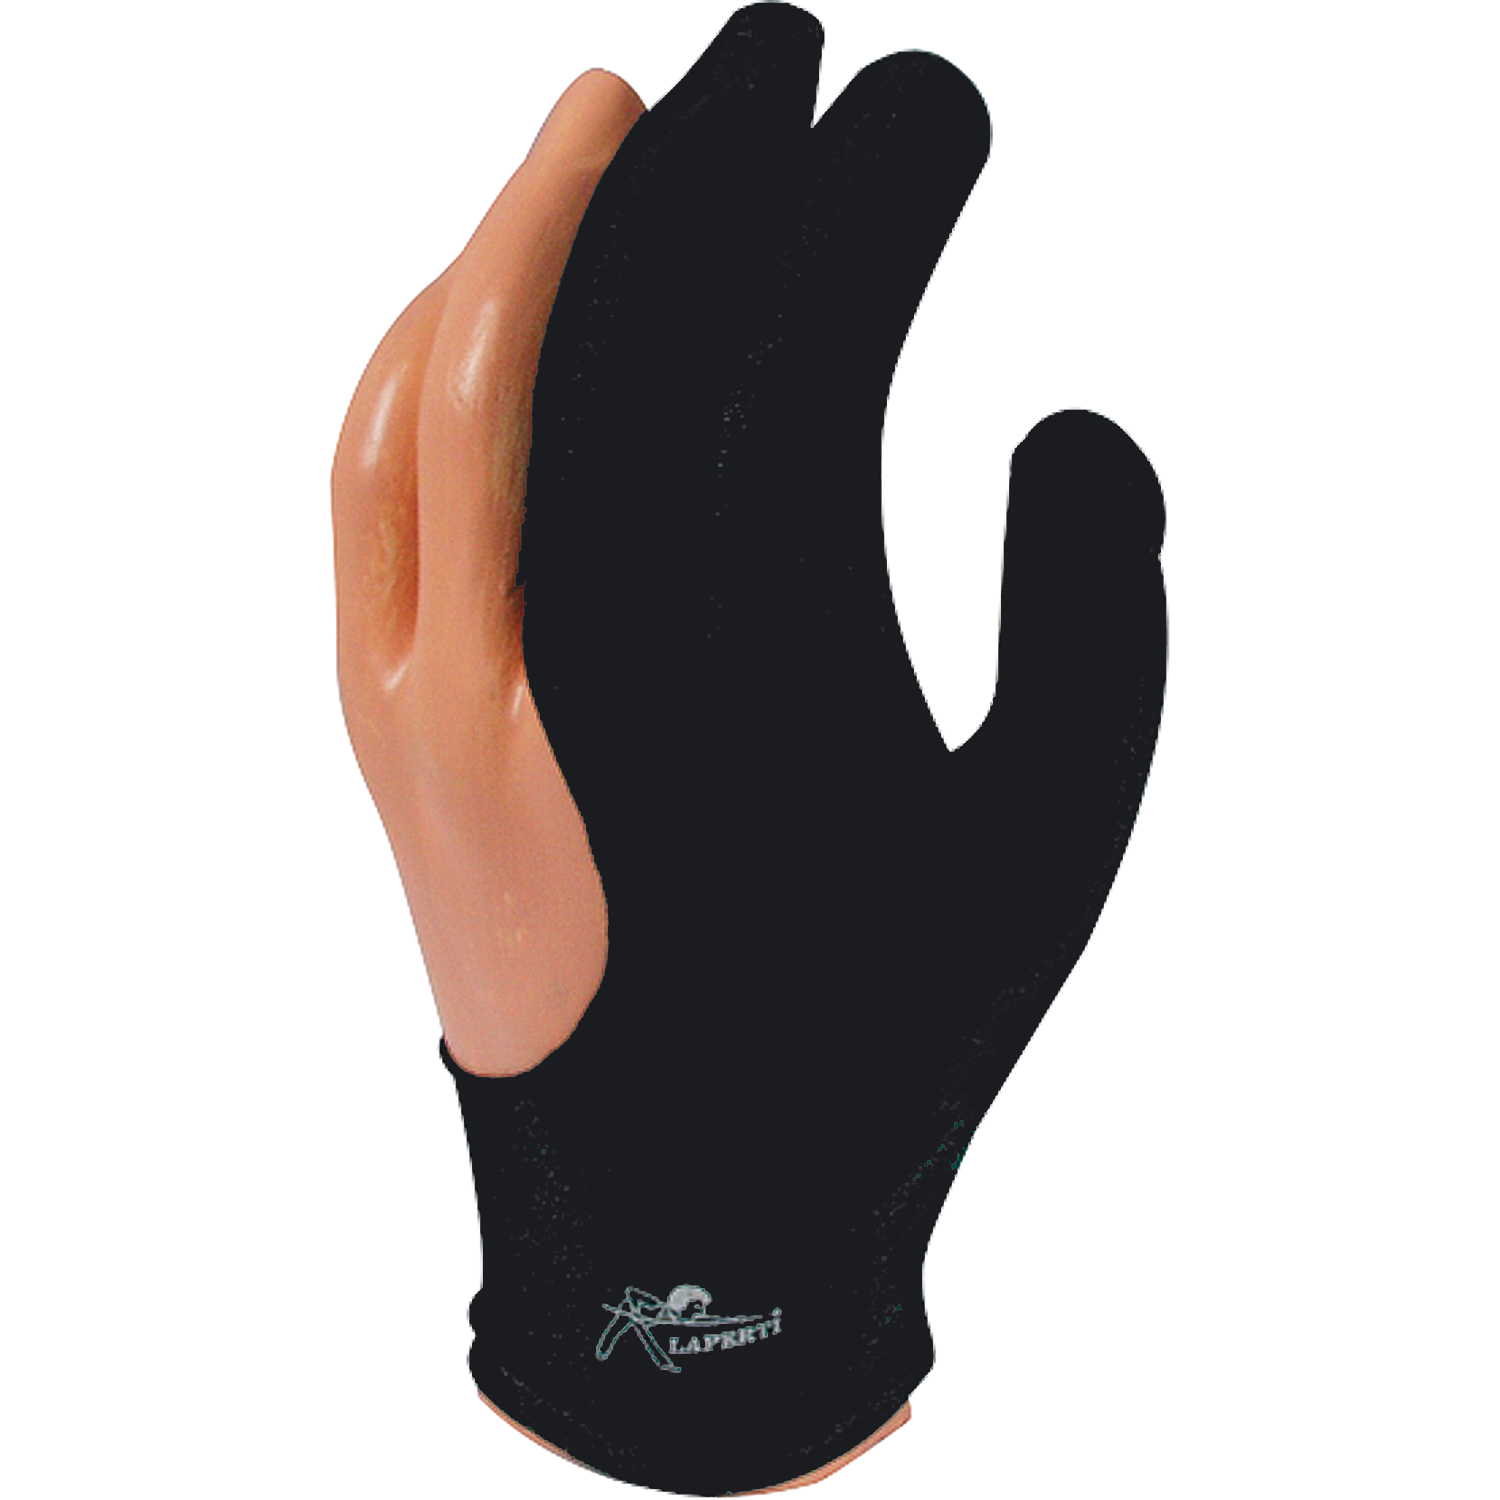 KA001087: Handschoen Laperti zwart  #1